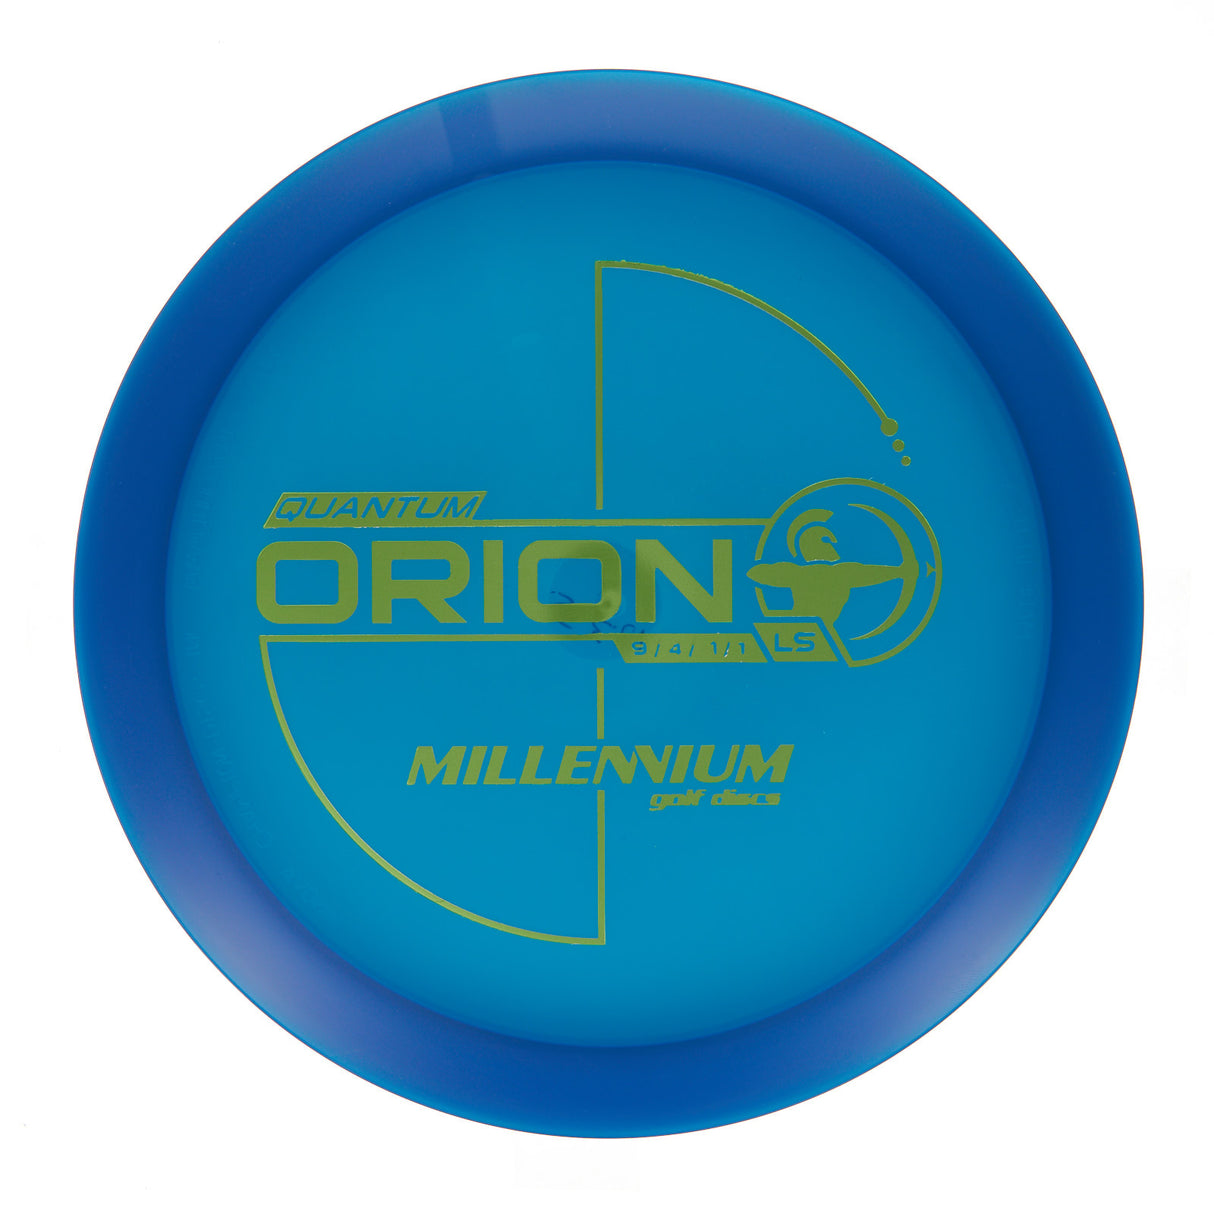 Millennium Orion LS - Quantum  174g | Style 0001